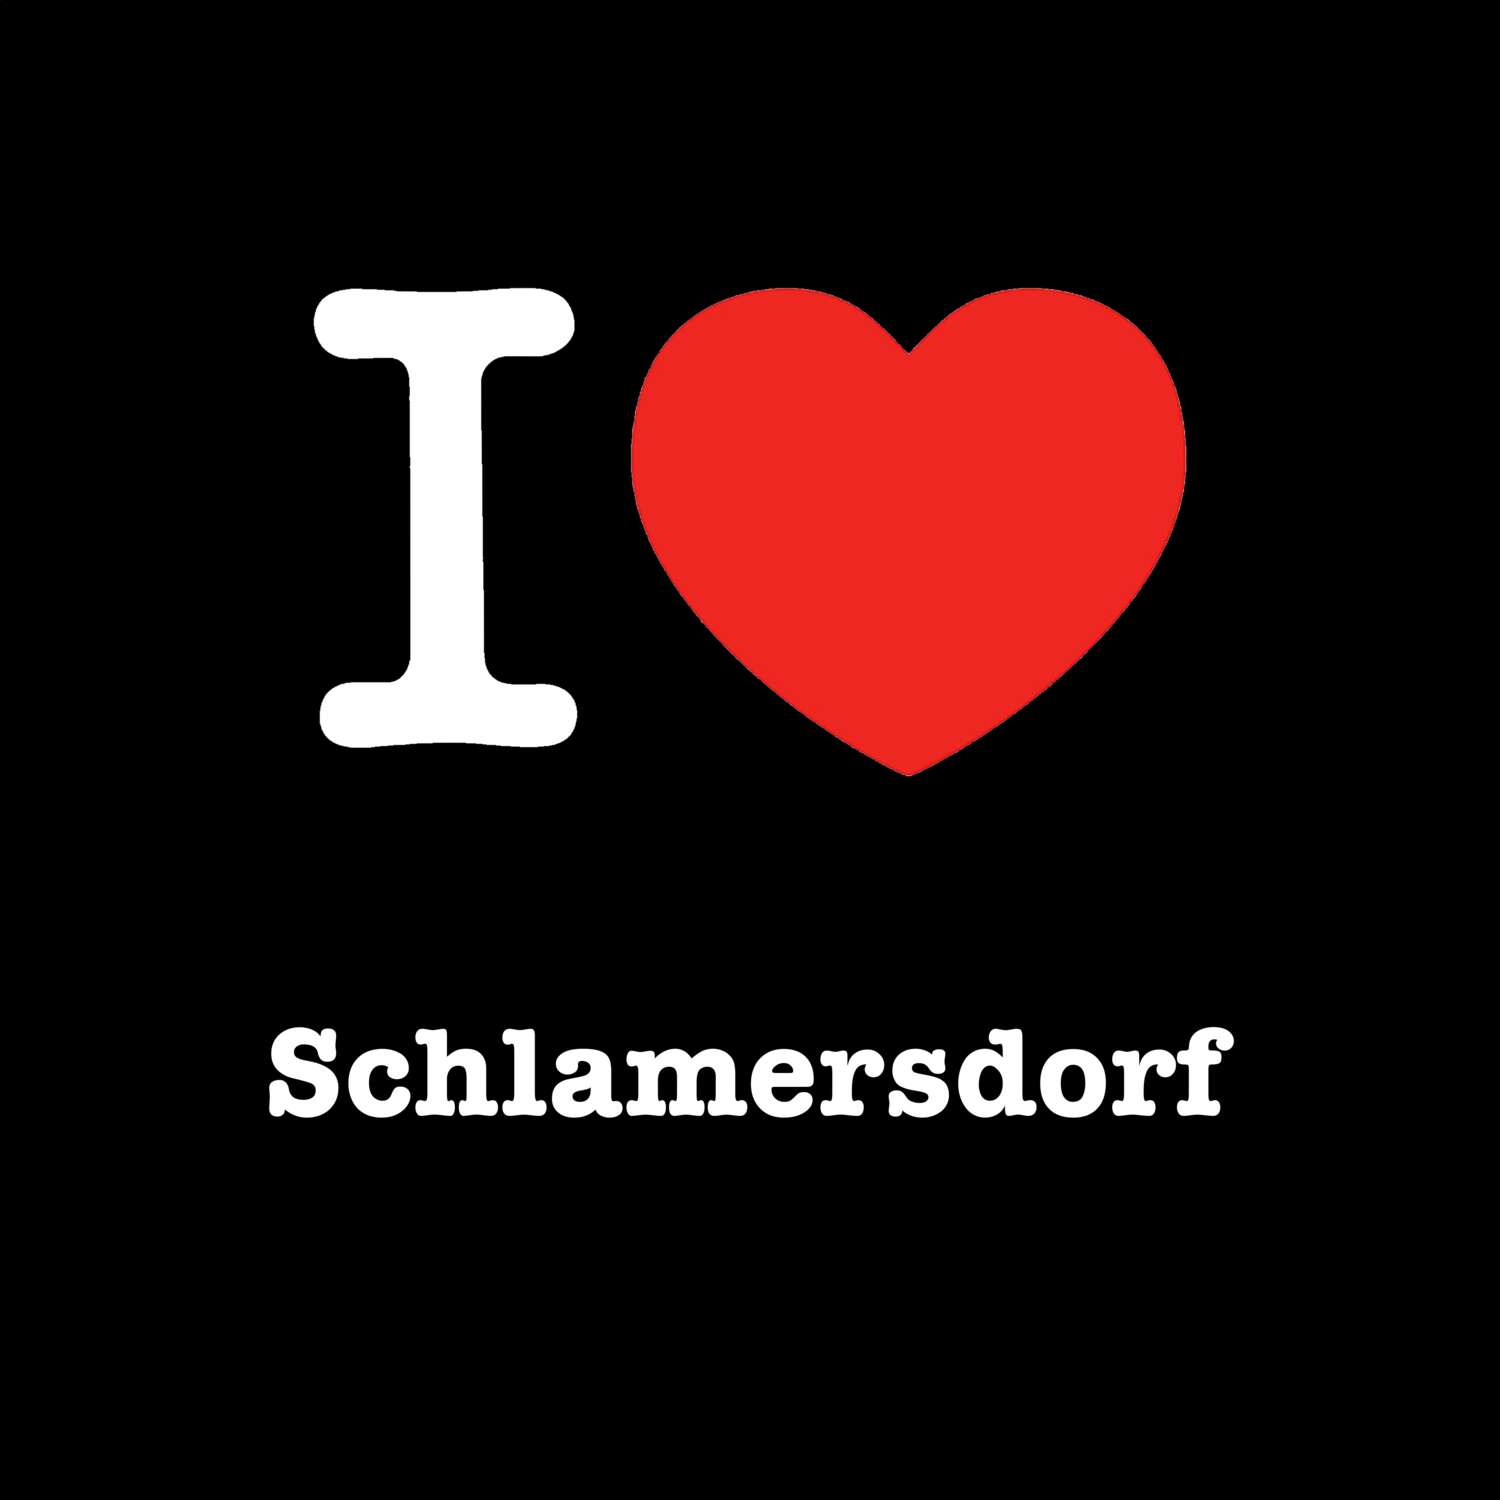 Schlamersdorf T-Shirt »I love«